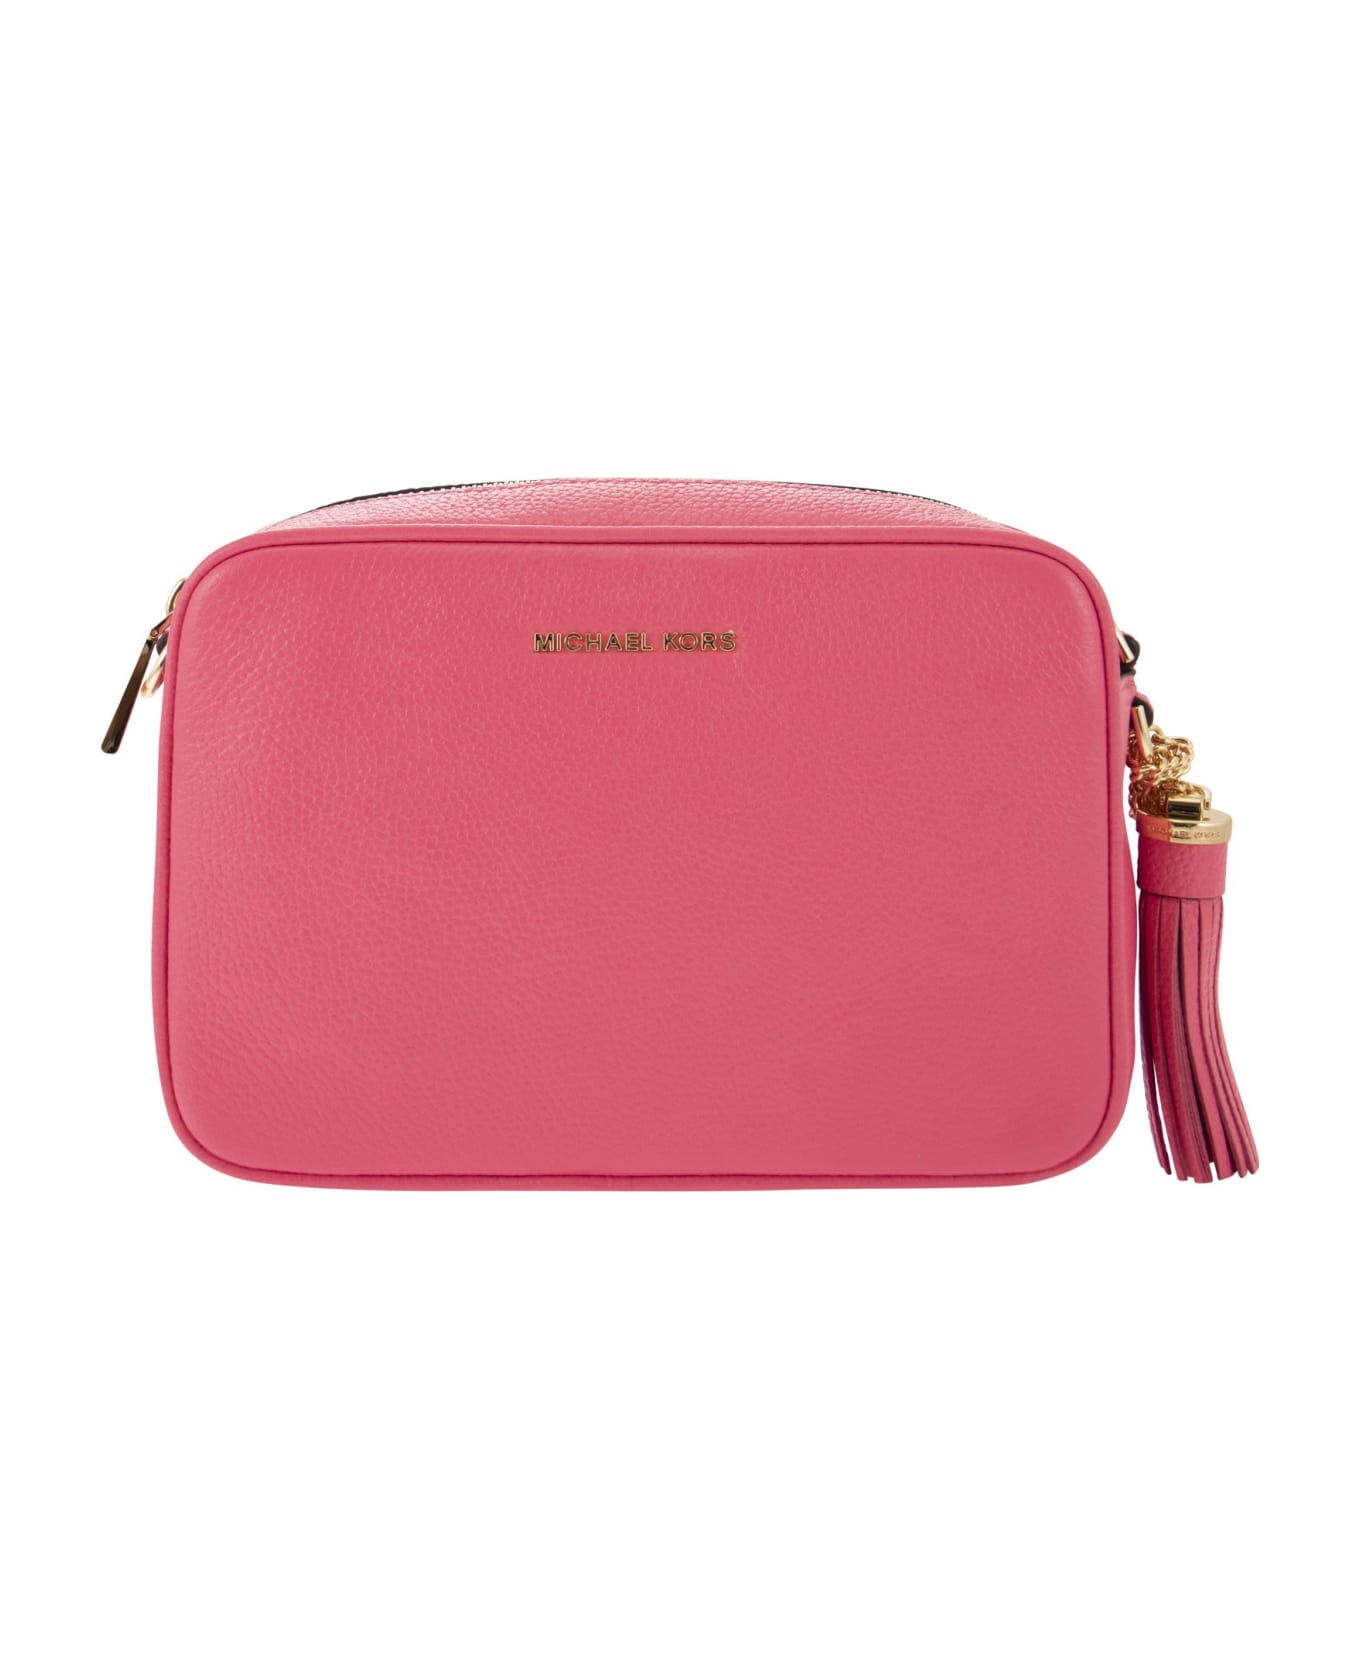 Michael Kors Ginny Leather Crossbody Bag - Pink